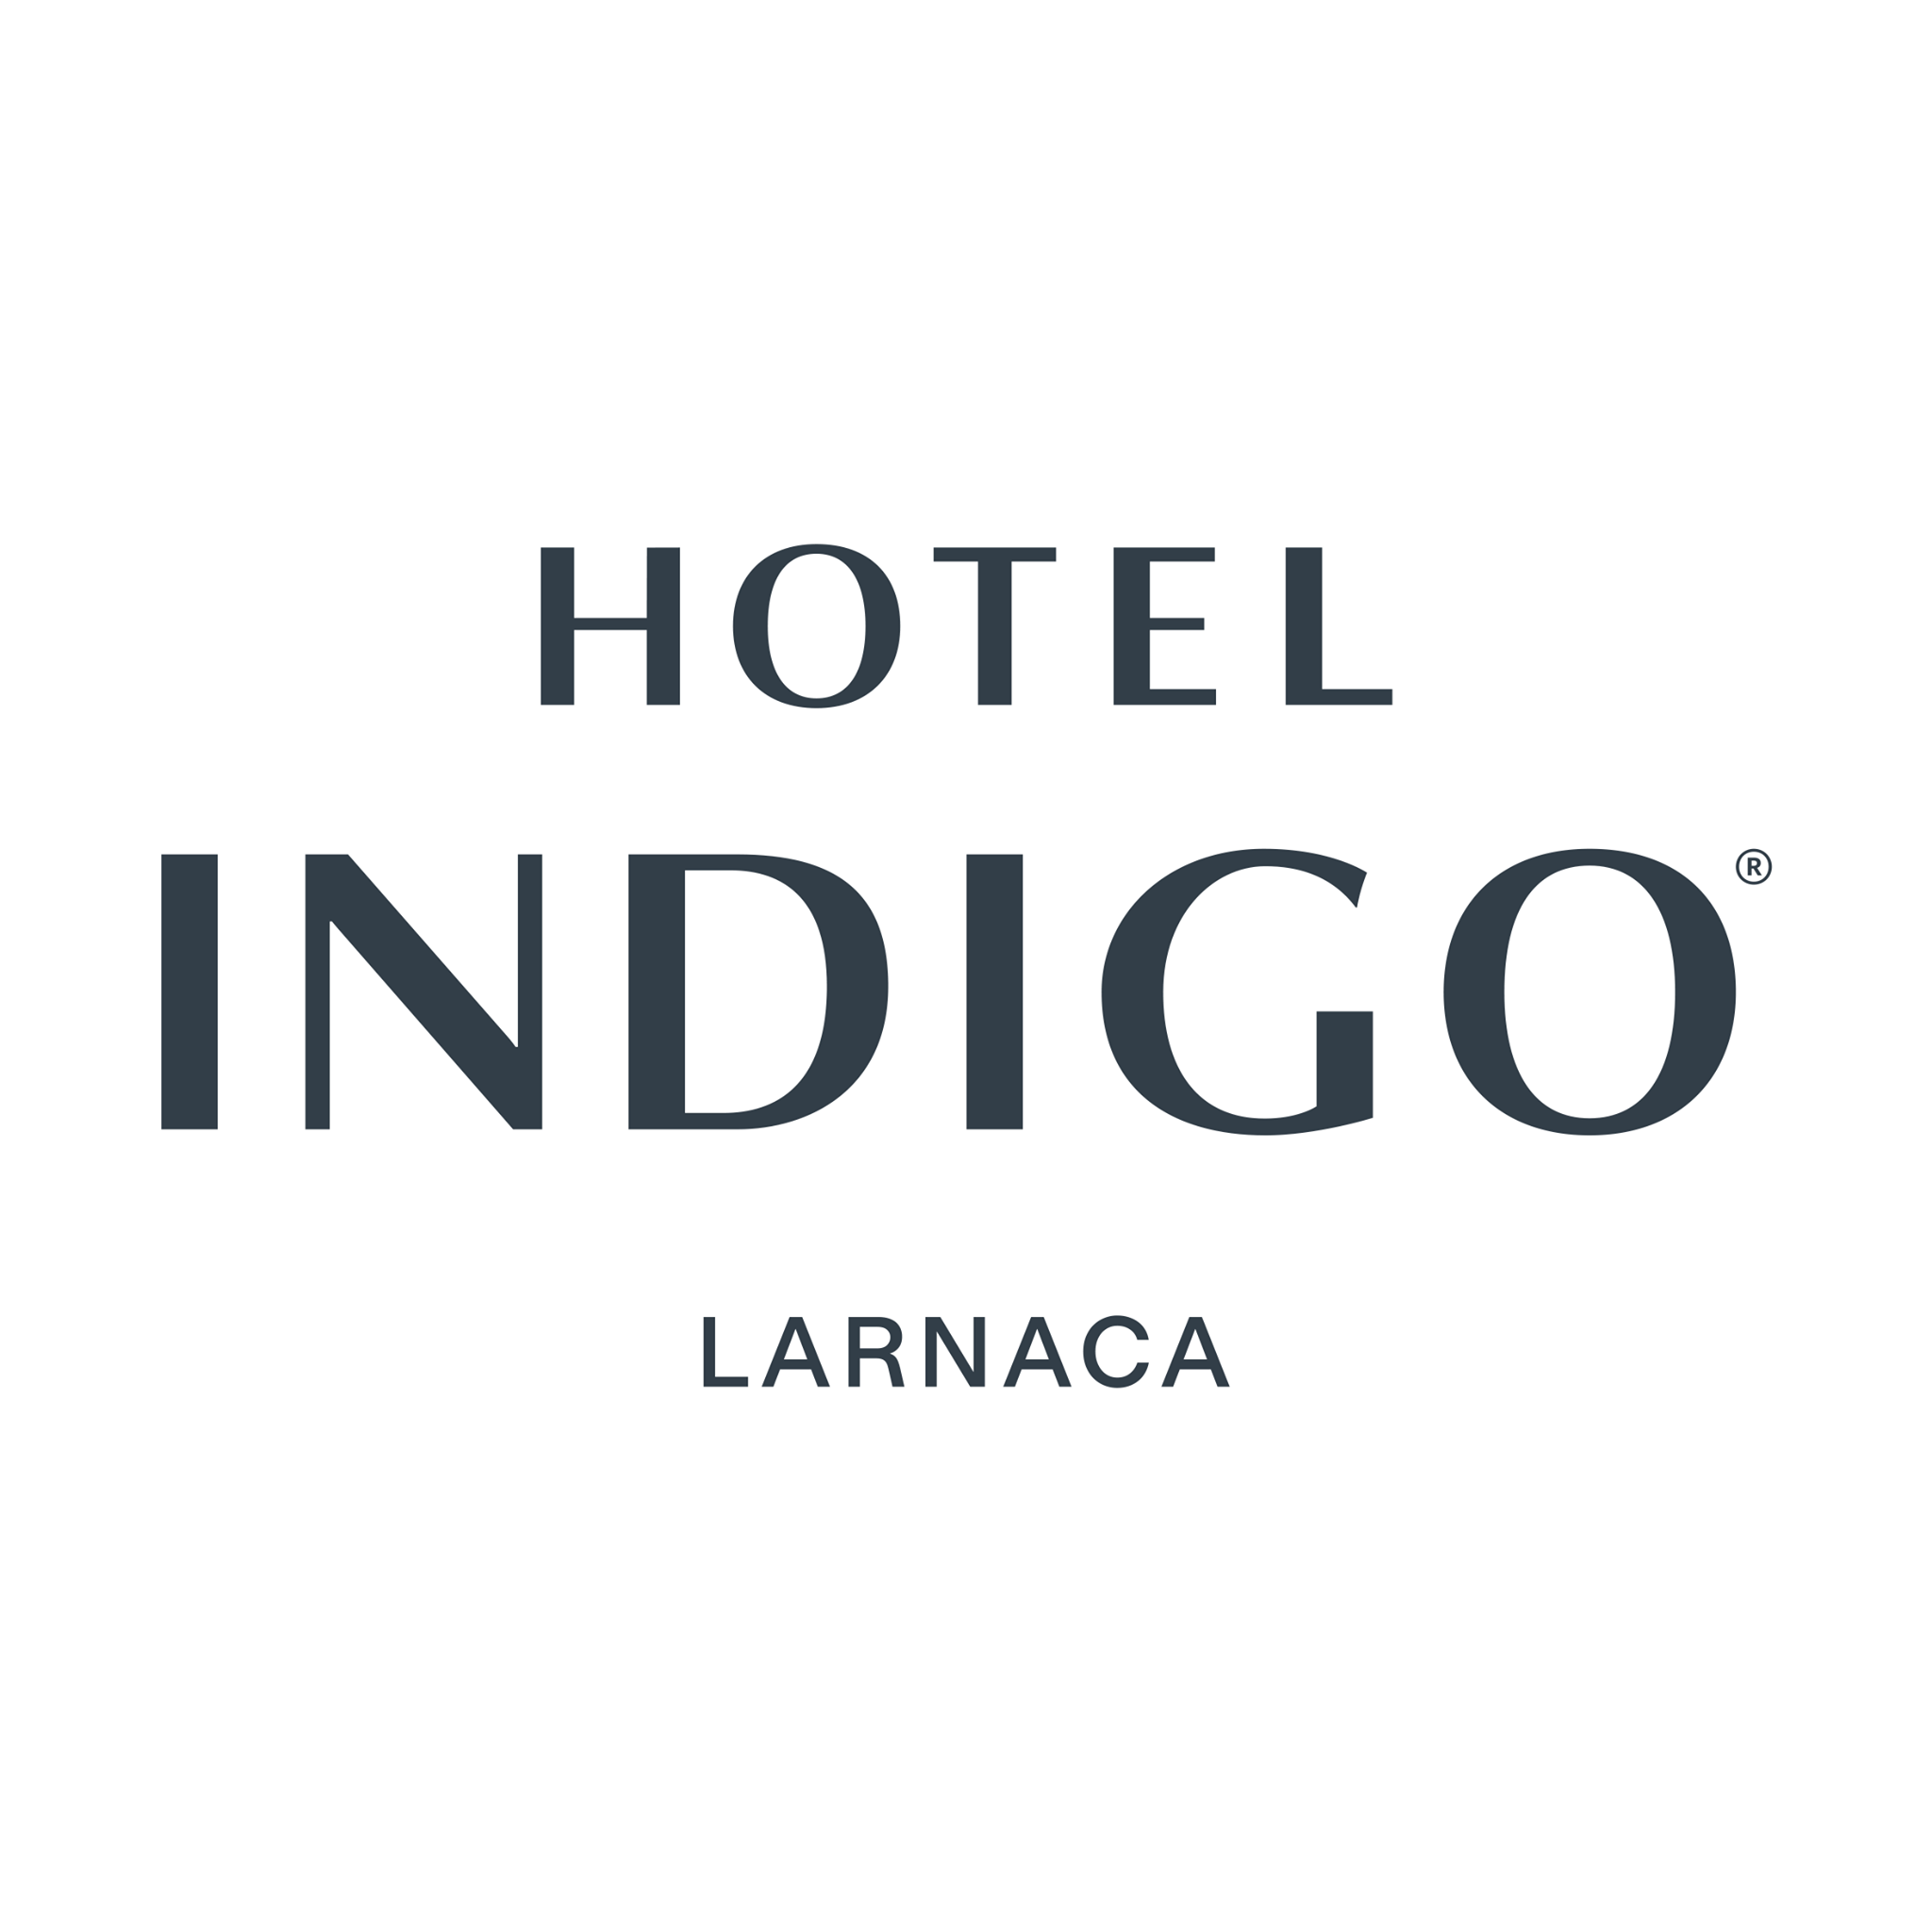 Oinoessa Wine Bar - Hotel Indigo Logo